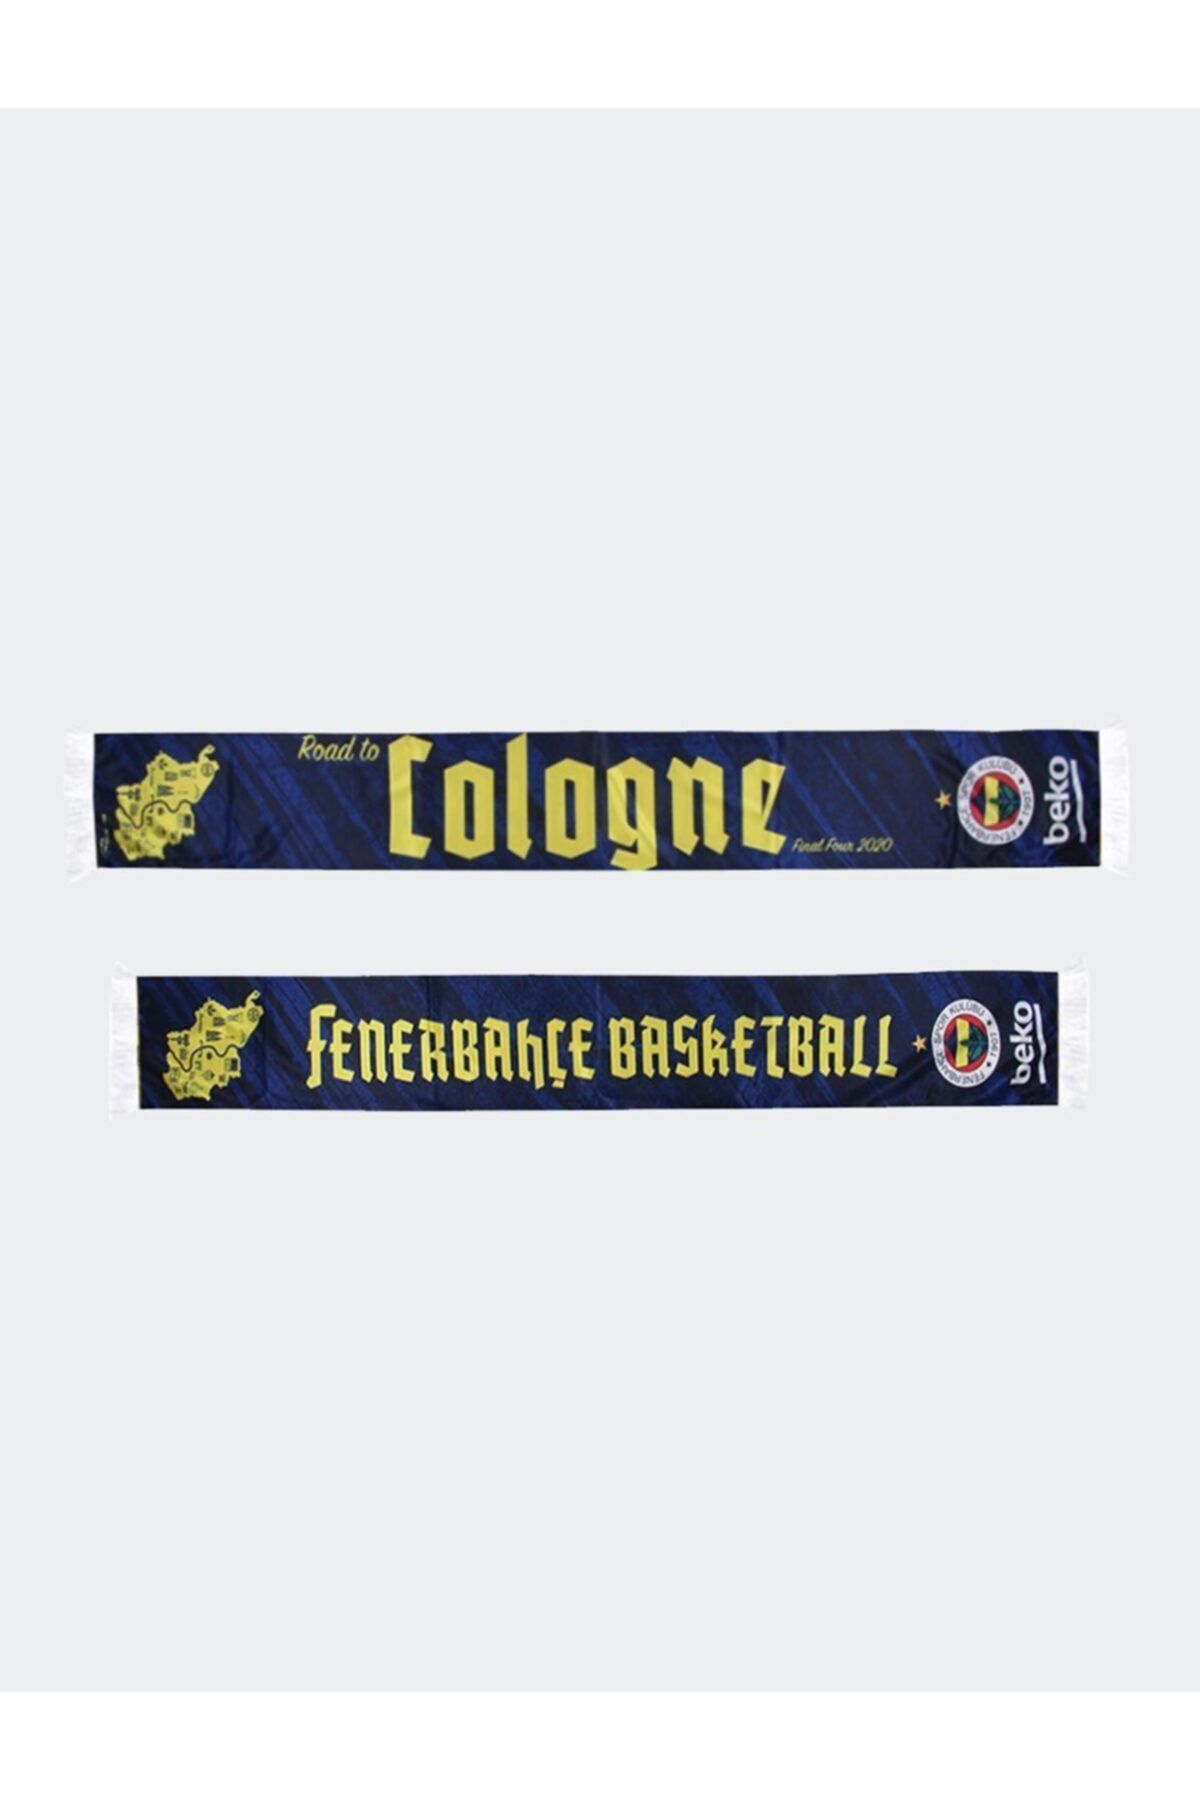 Fenerbahçe 19-20 Basket Road To Cologne Şal